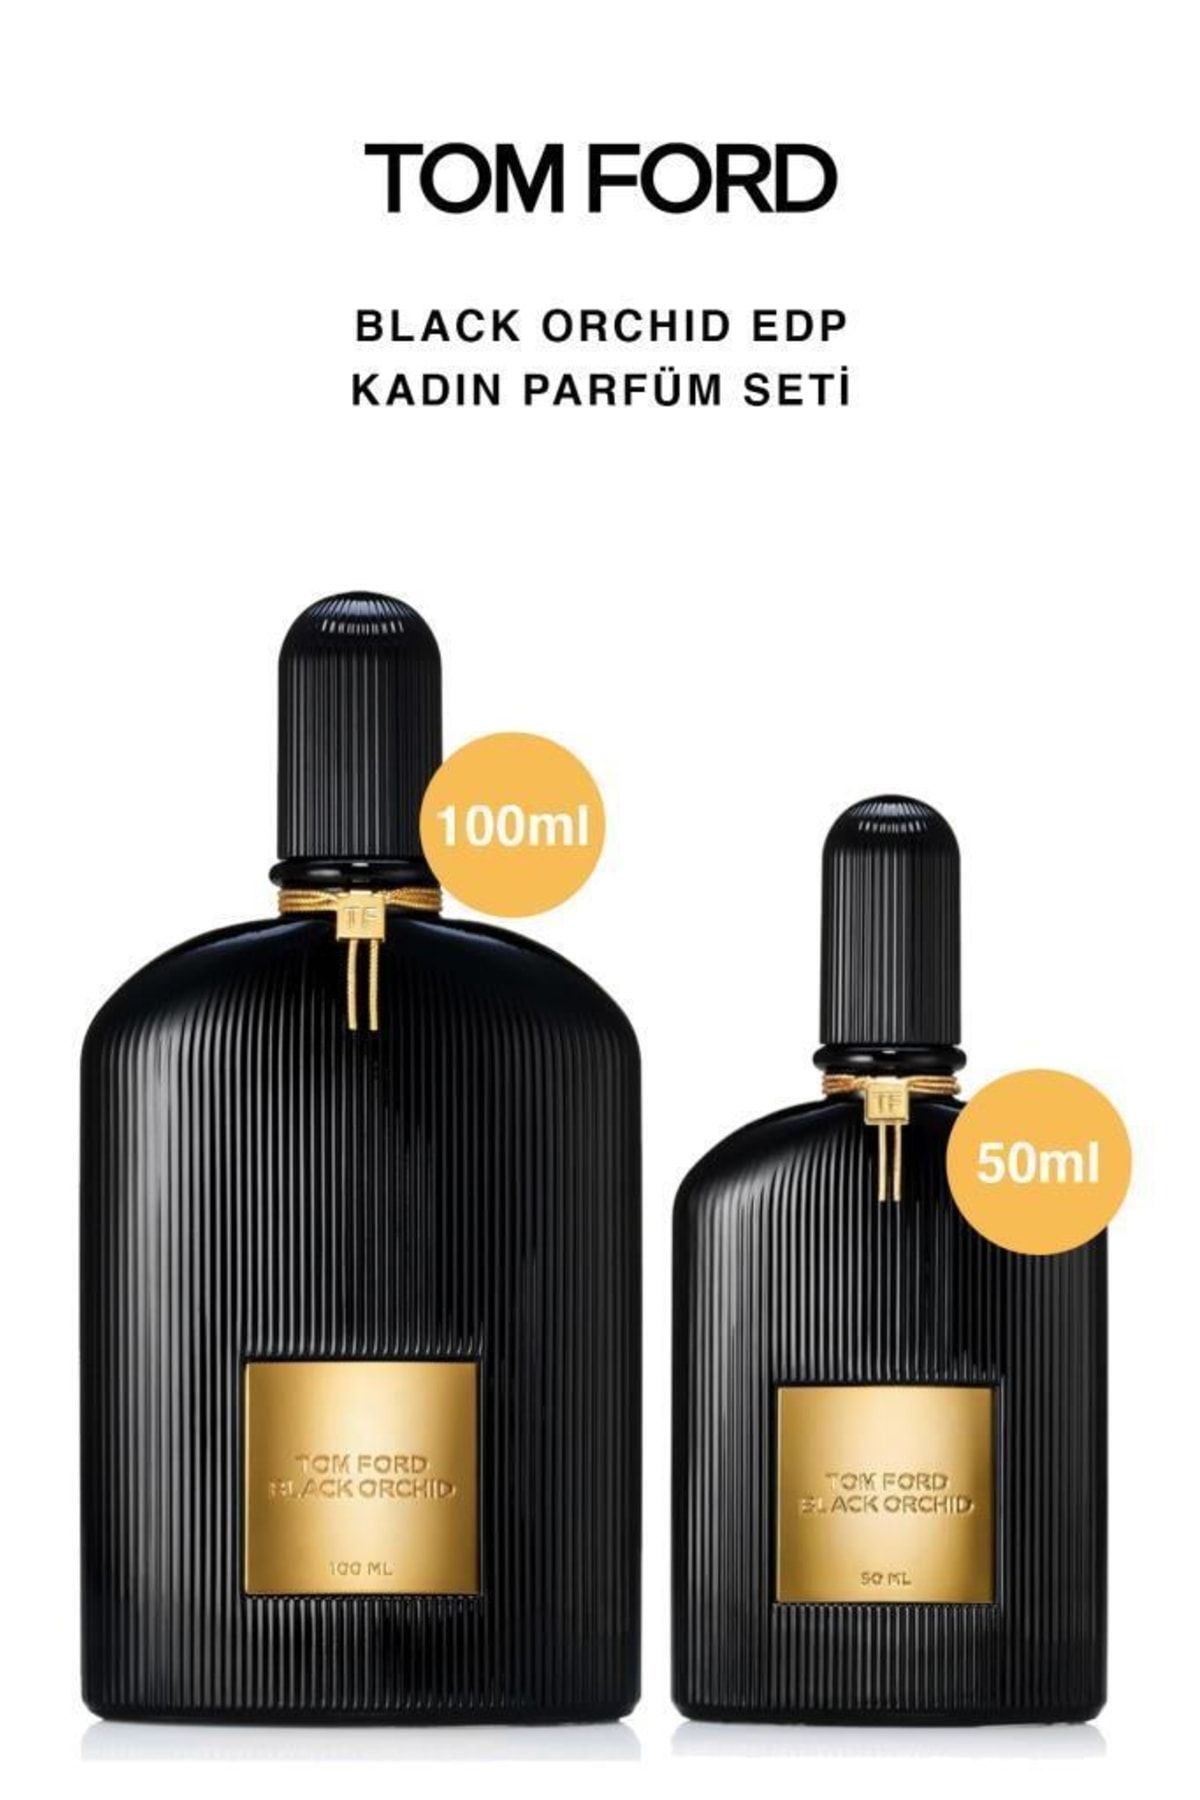 Tom Ford Black Orchid Modern-cezbedici  Kadın-erkek Parfüm Seti 100 Ve 50 Ml Set